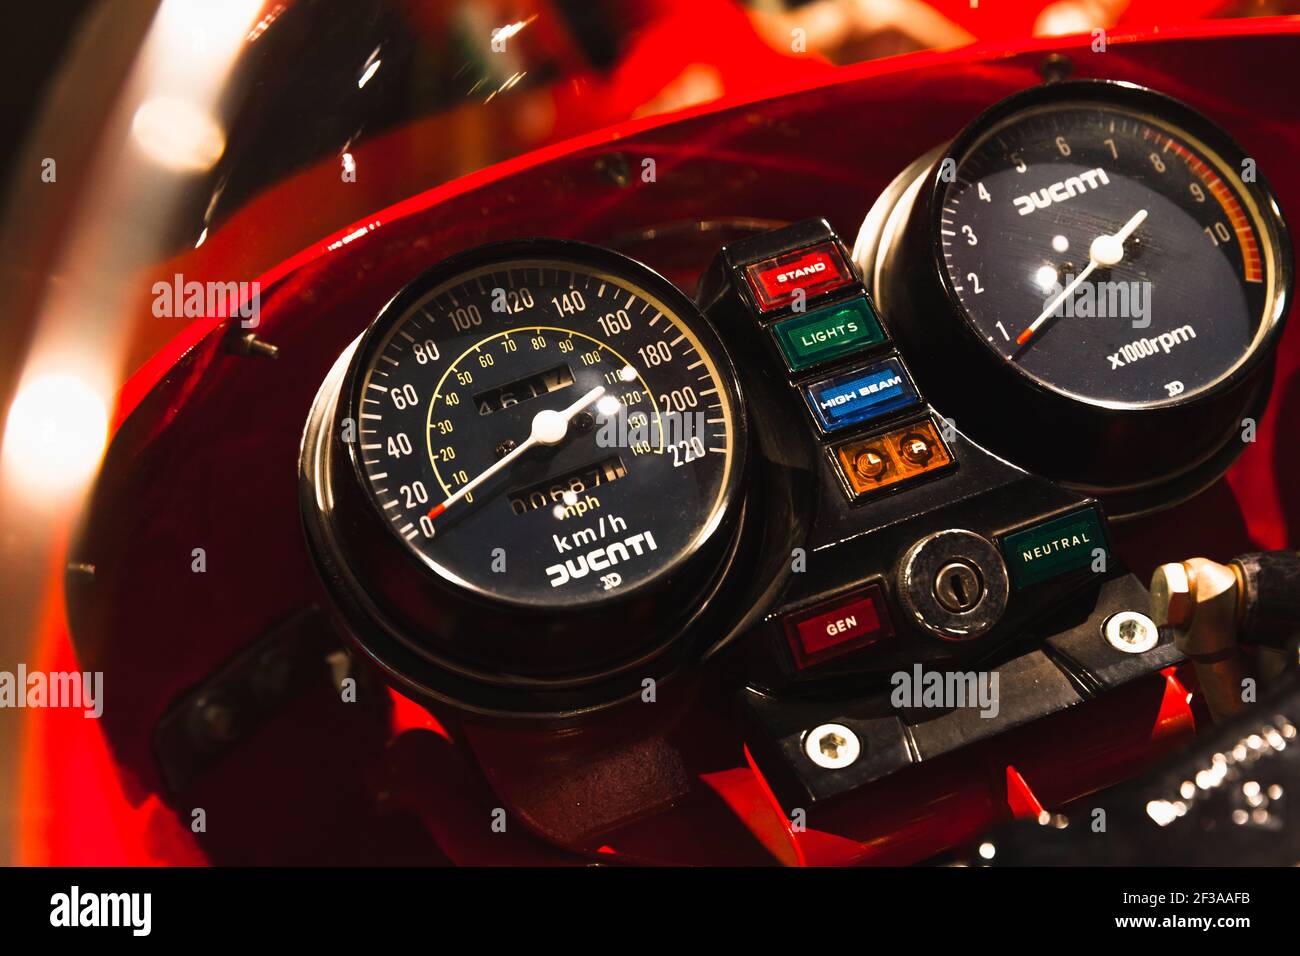 St.Petersburg, Russland - 9. April 2016: Ducati Sportbike Armaturenbrett mit analogem Tachometer, Tachometer, Kilometerzähler und Knöpfen Stockfoto